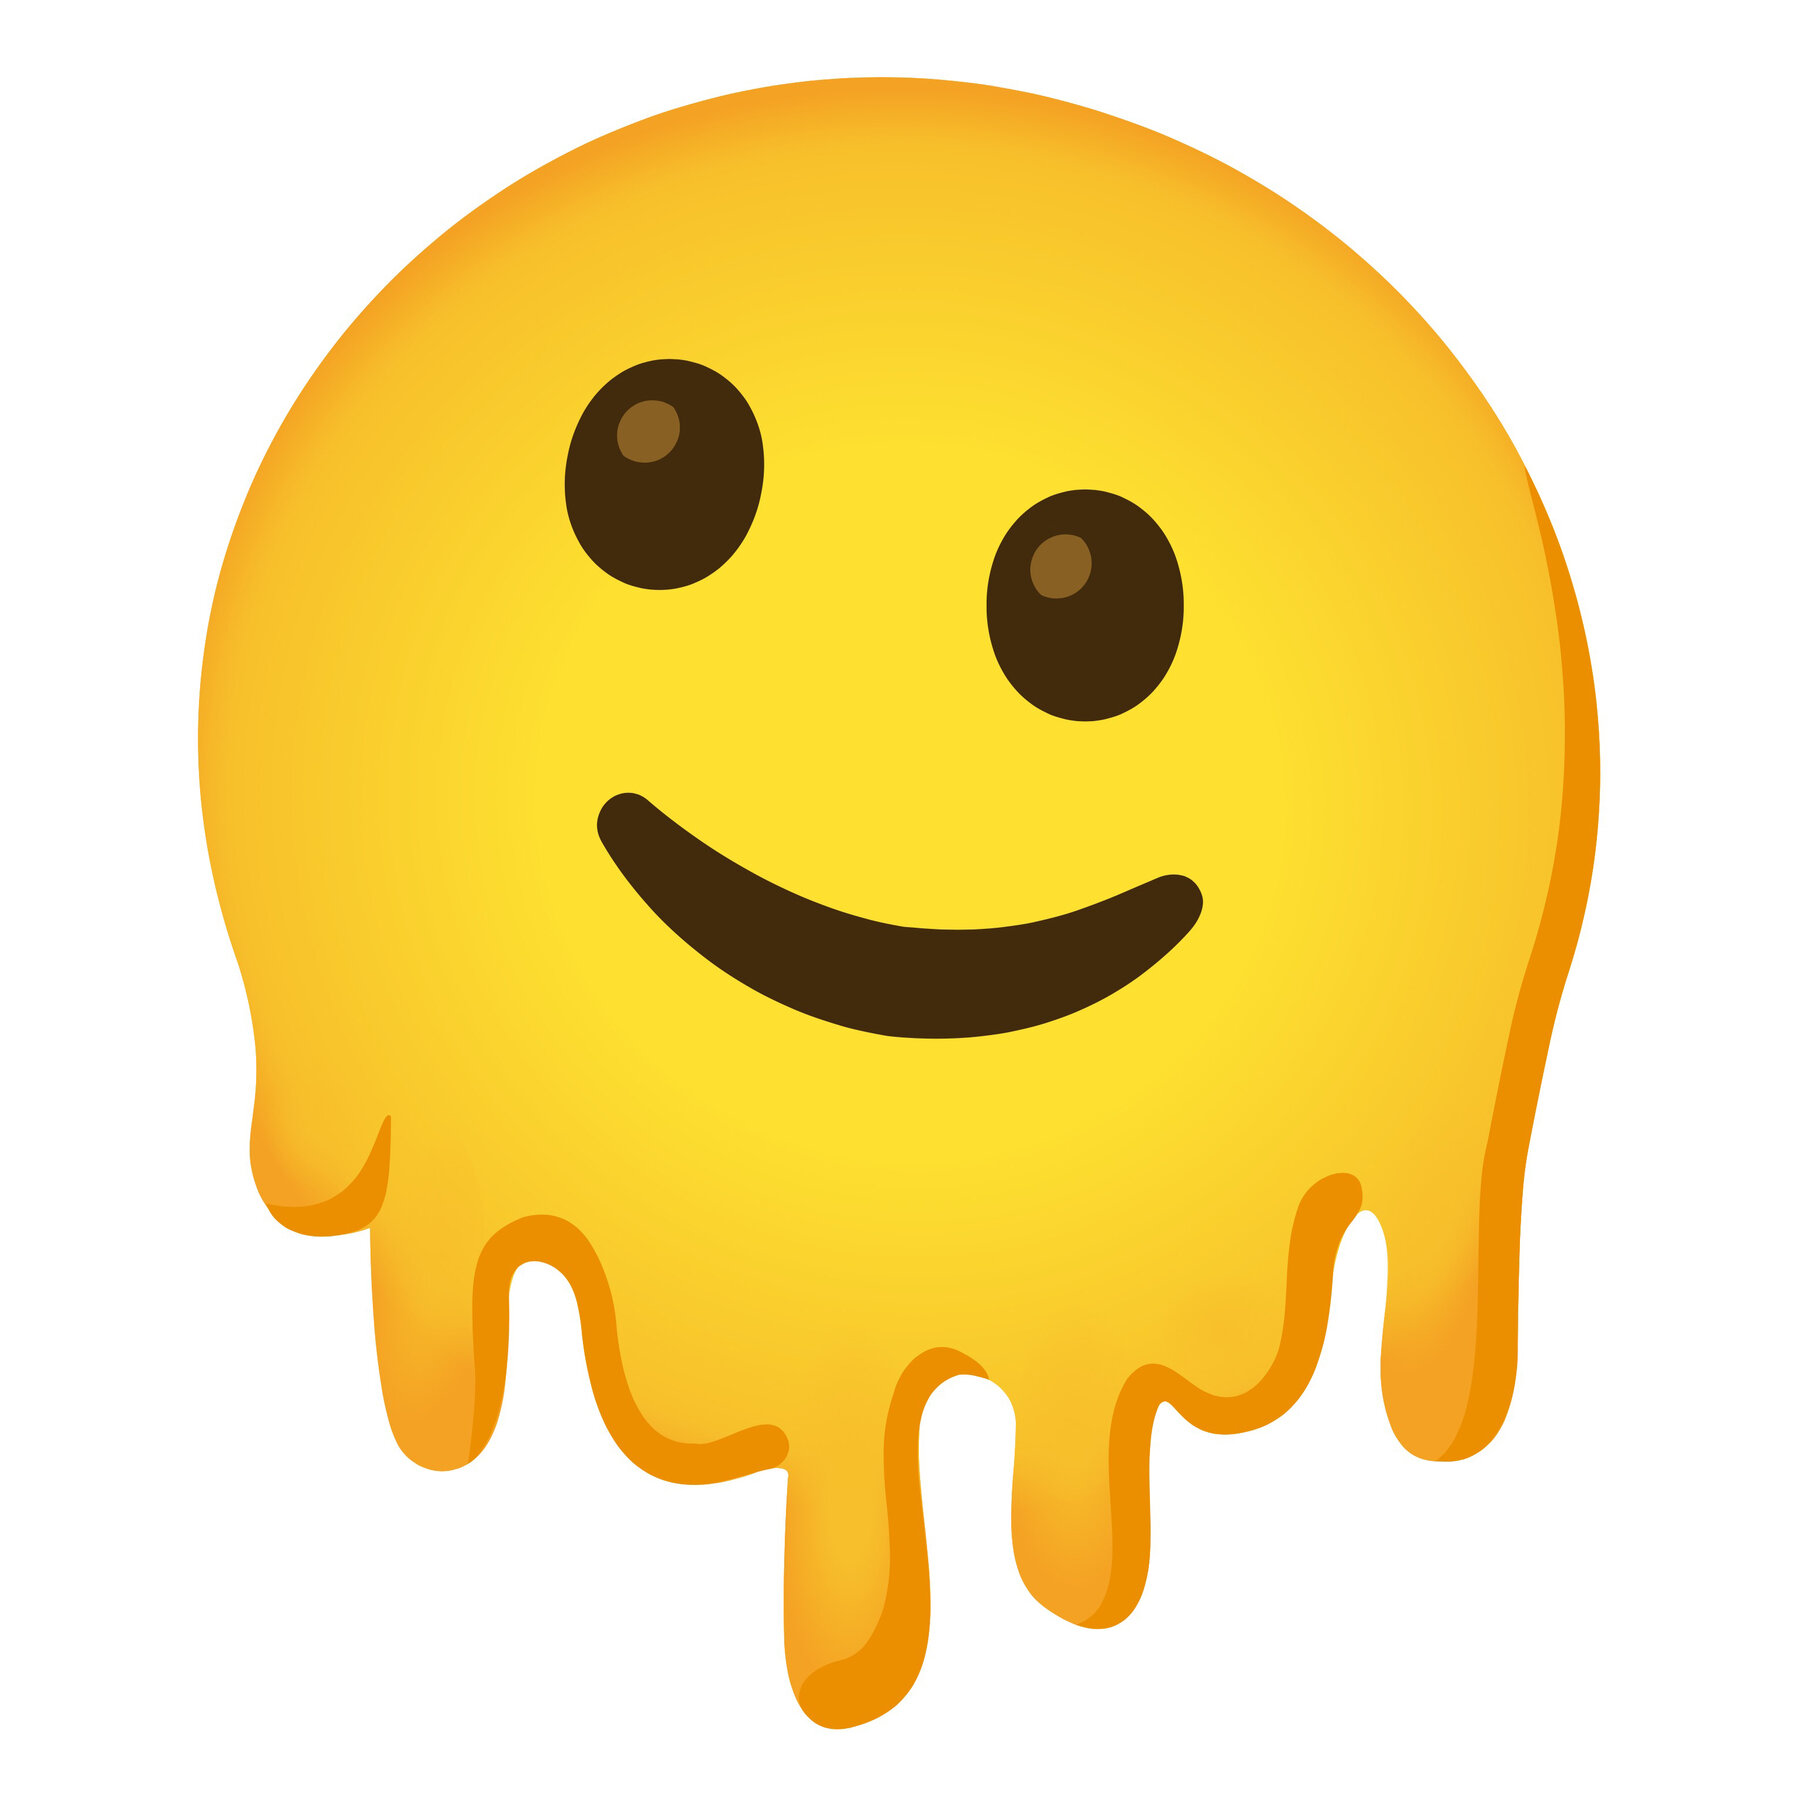 melting emoji meaning